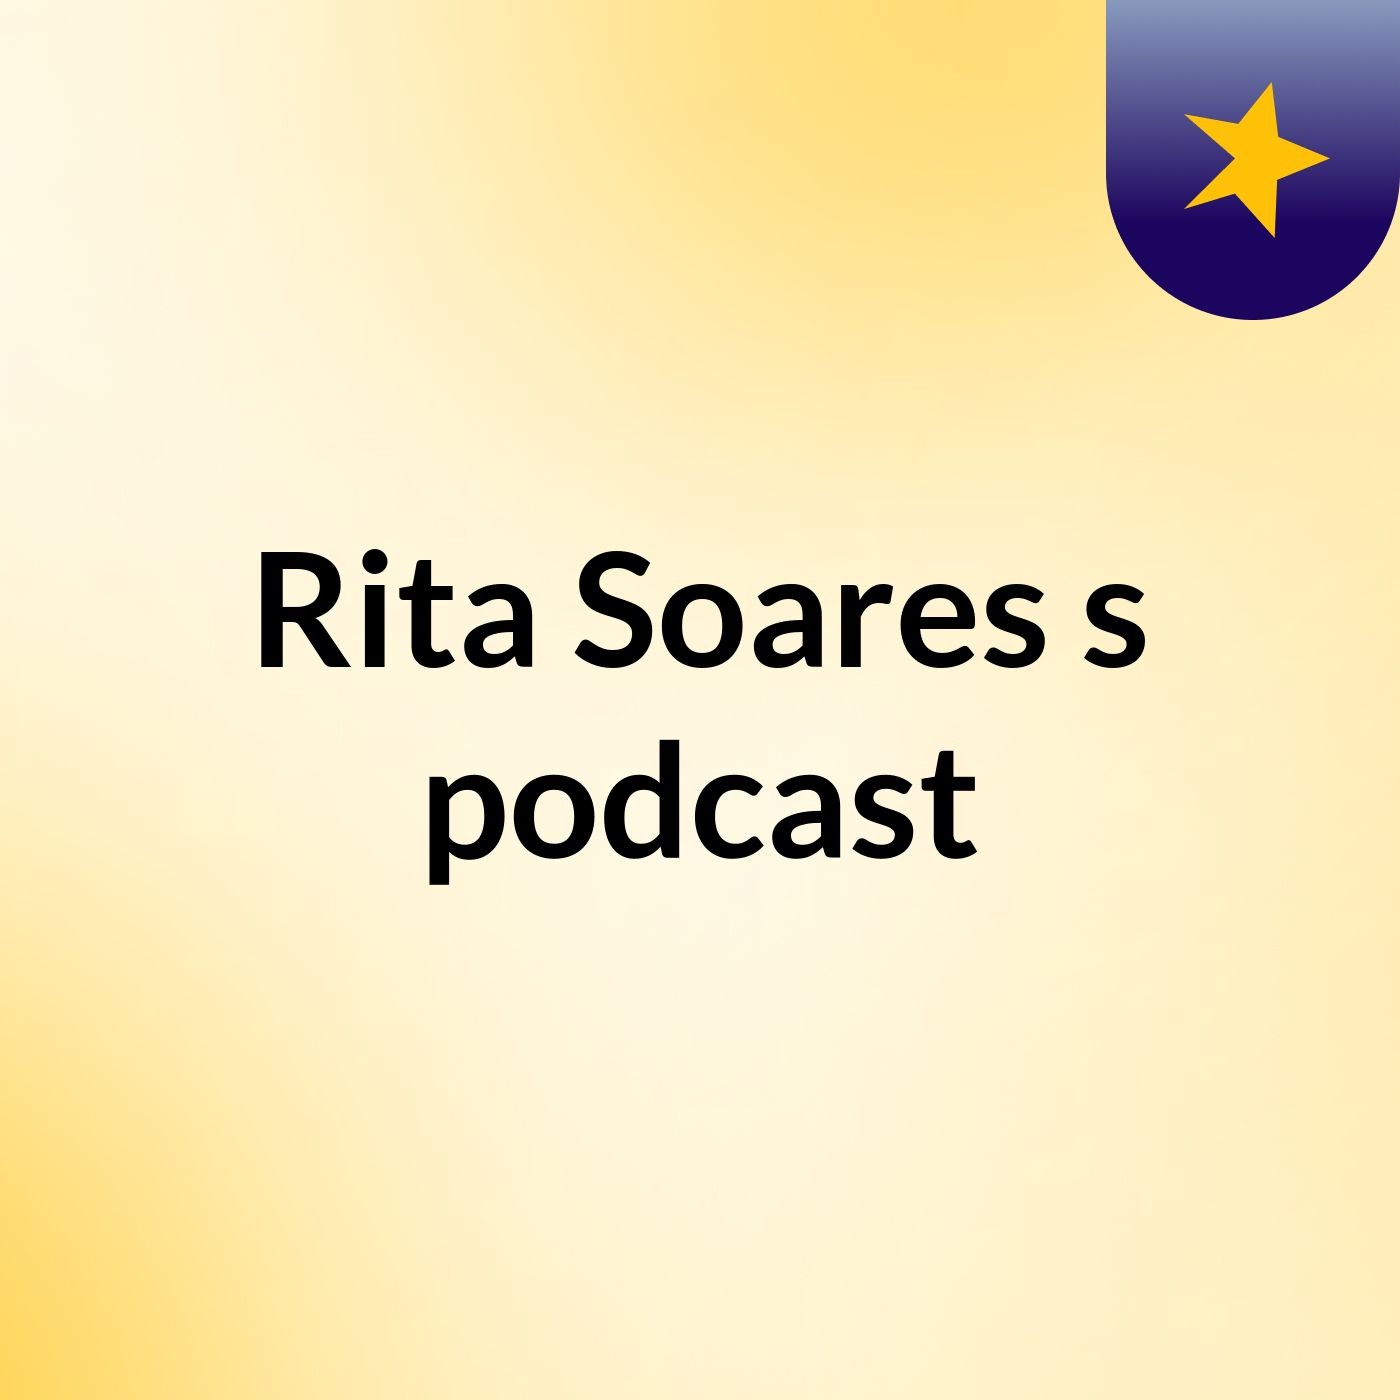 Rita Soares's podcast